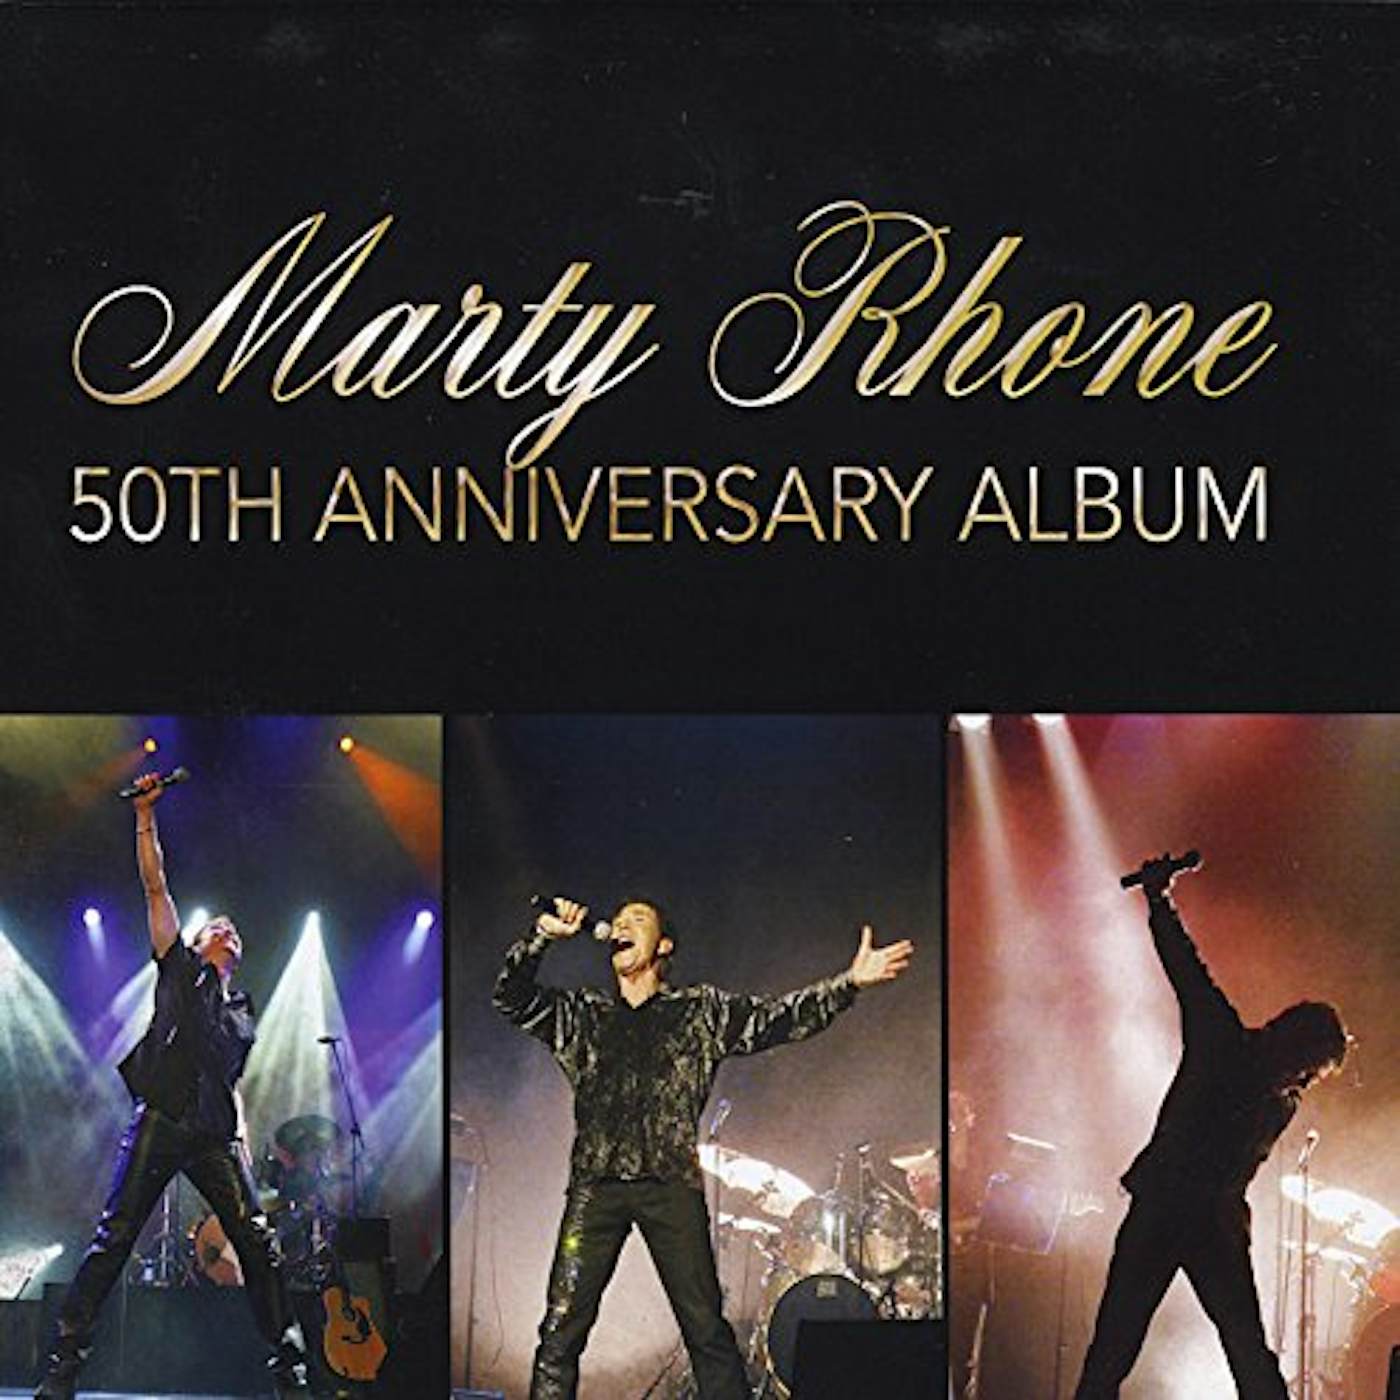 Marty Rhone 50TH ANNIVERSARY ALBUM CD